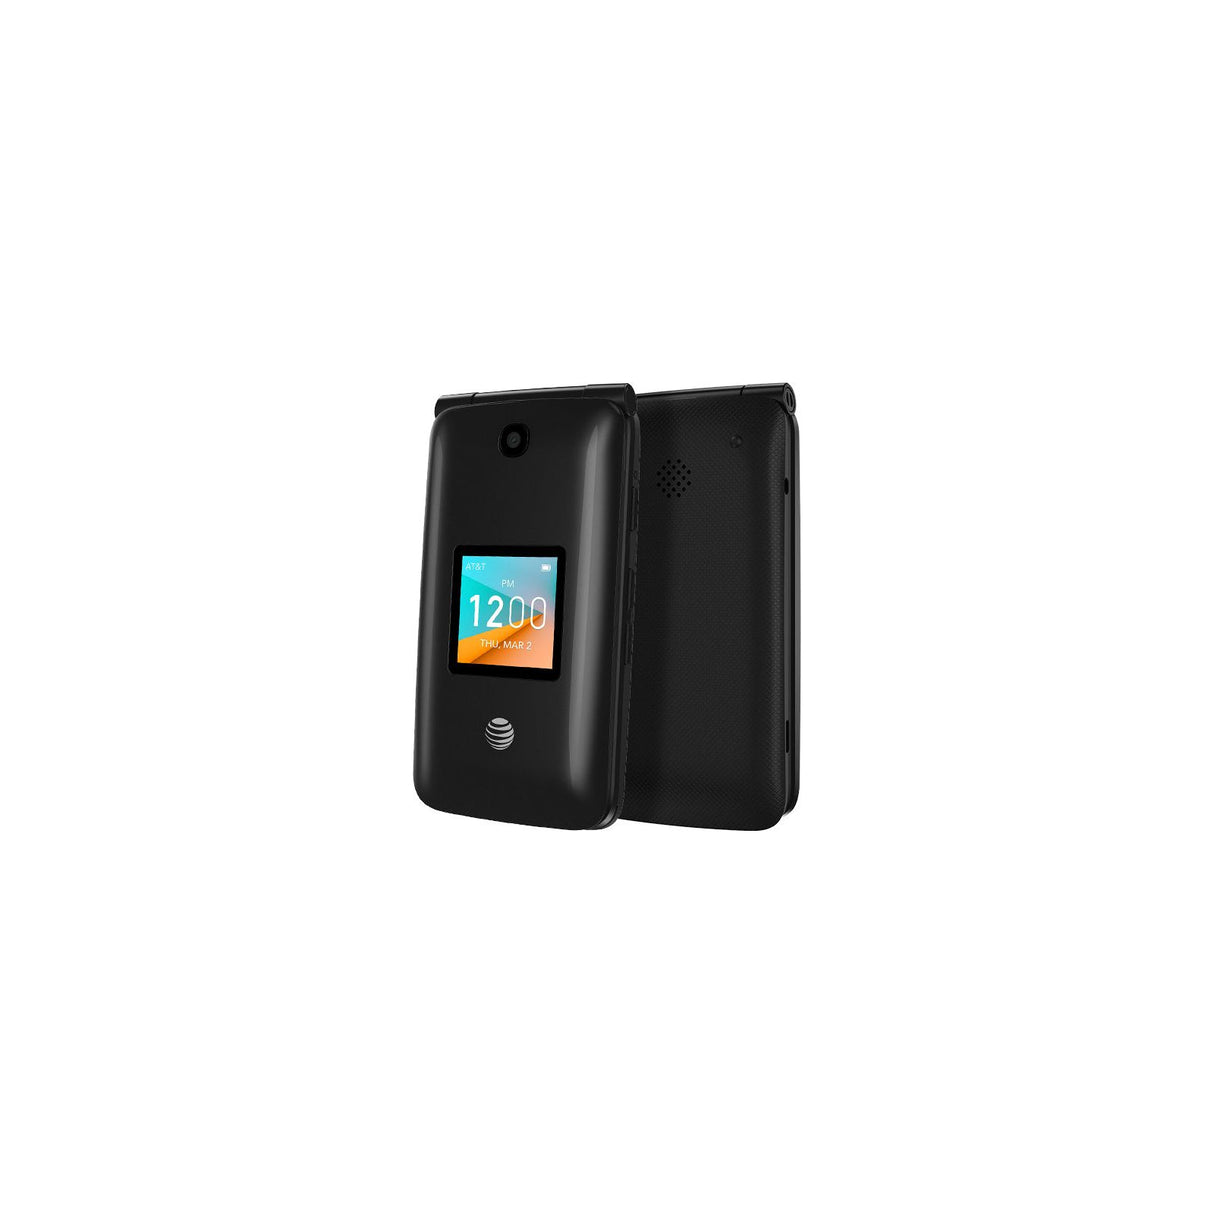 AT&T Cingular Flip 2 Prepaid Phone - 4 GB - Dark Gray - AT&T - G